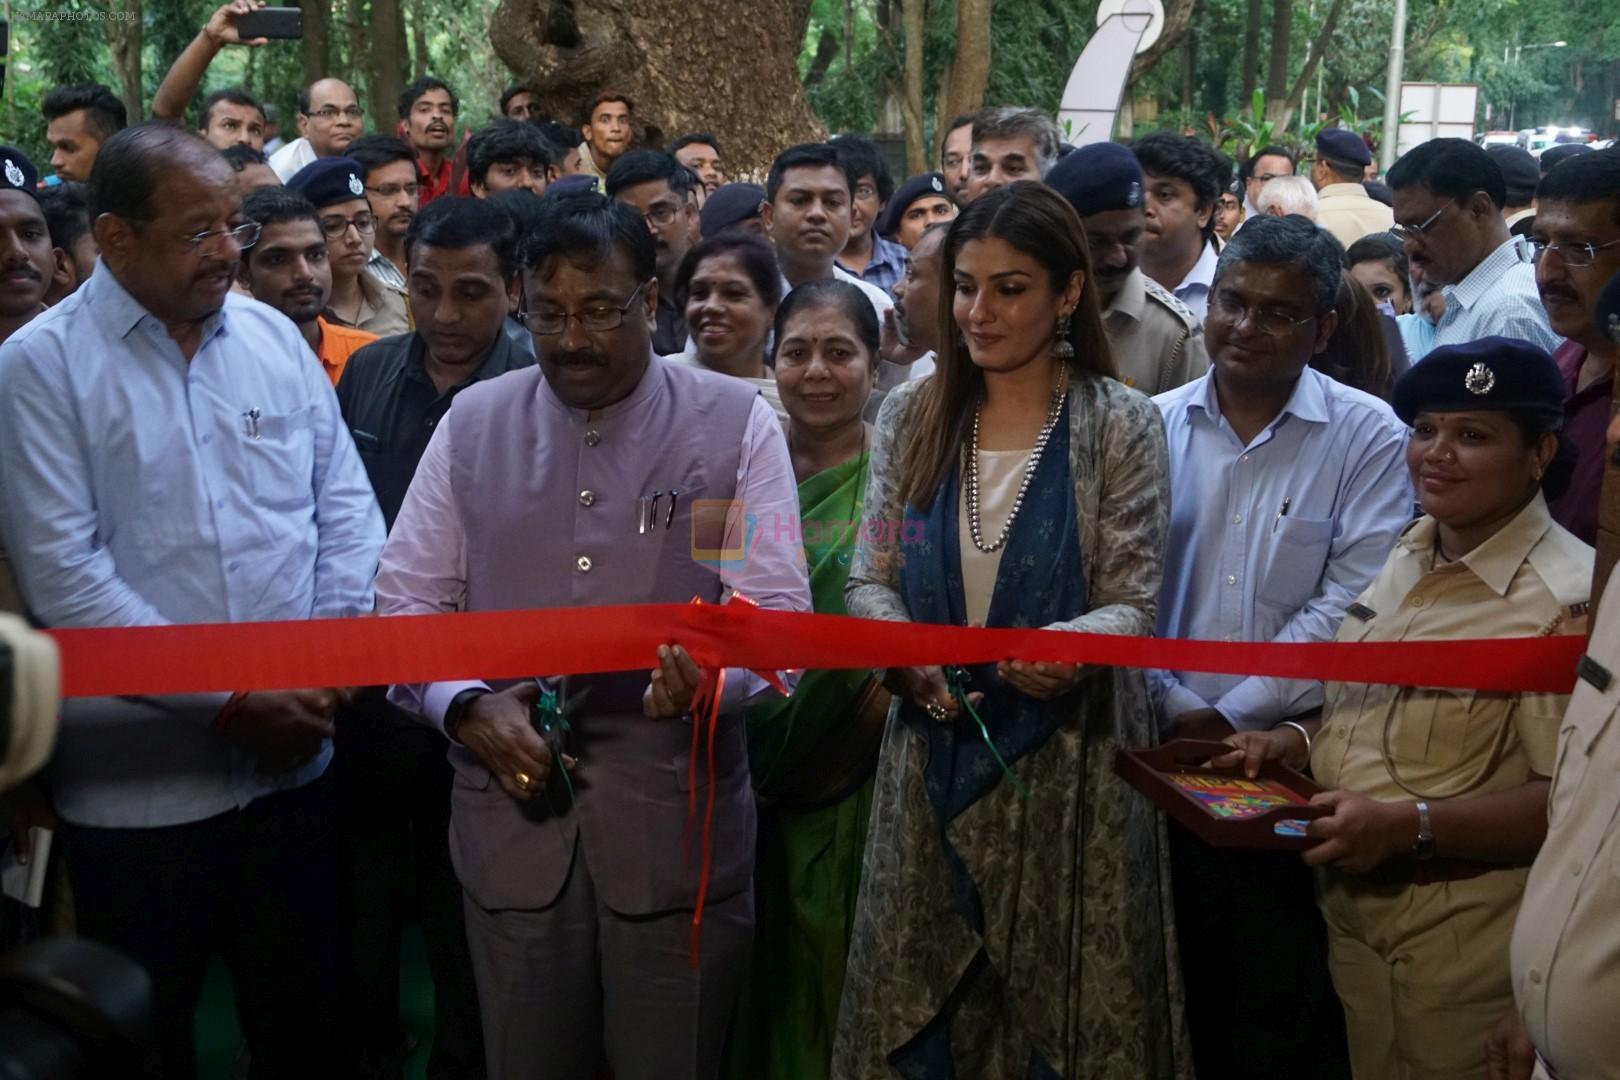 Raveena Tandon was Brand Ambassador Of Sanjay Gandhi National Park on 25th Sept 2018